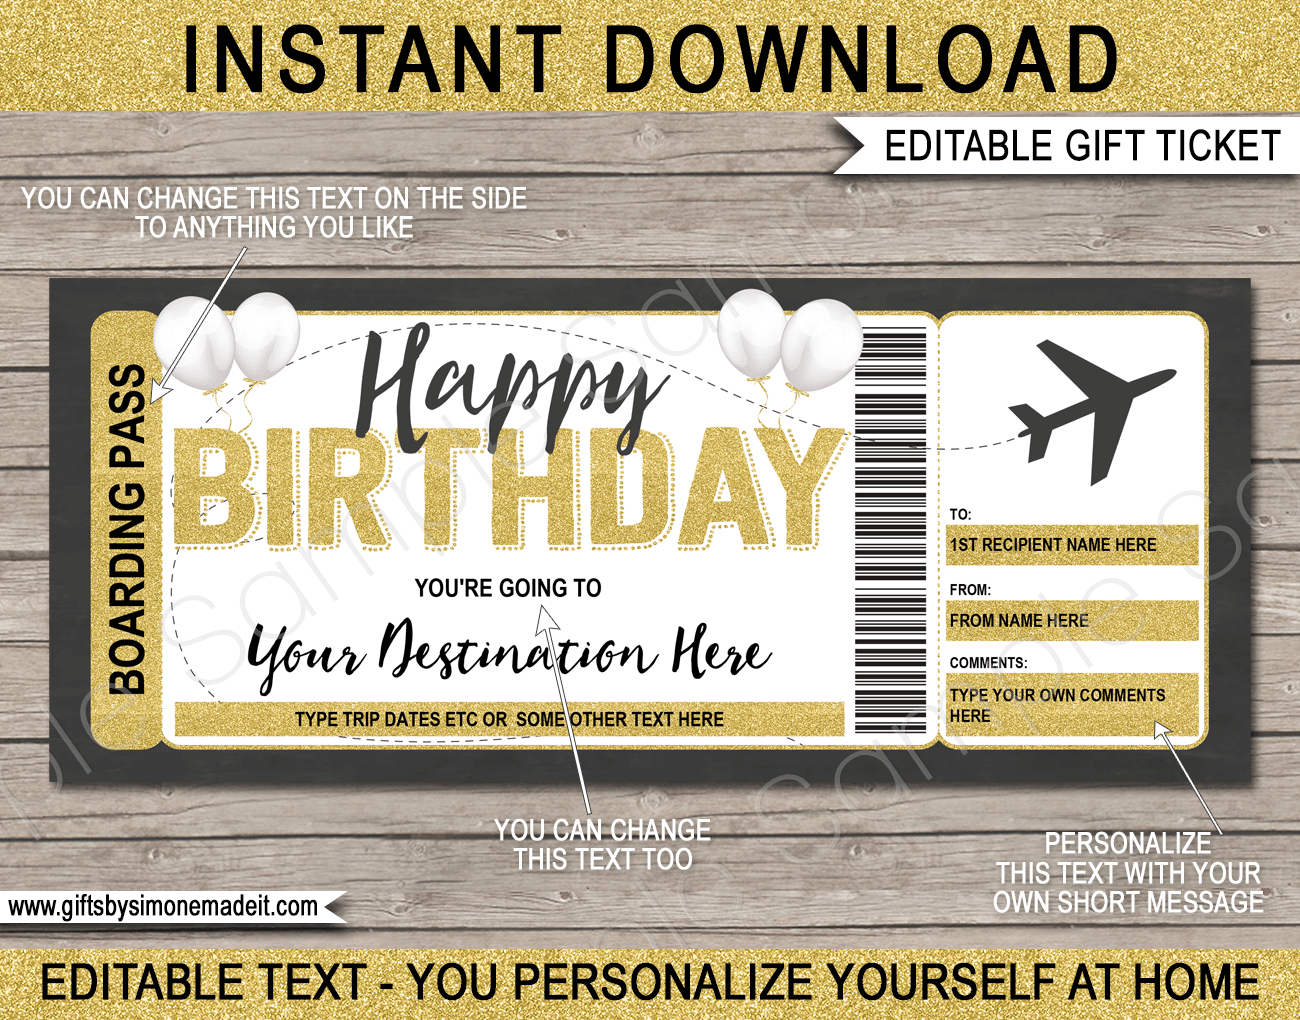 Printable Birthday Boarding Pass Template Surprise Trip Plane Ticket T